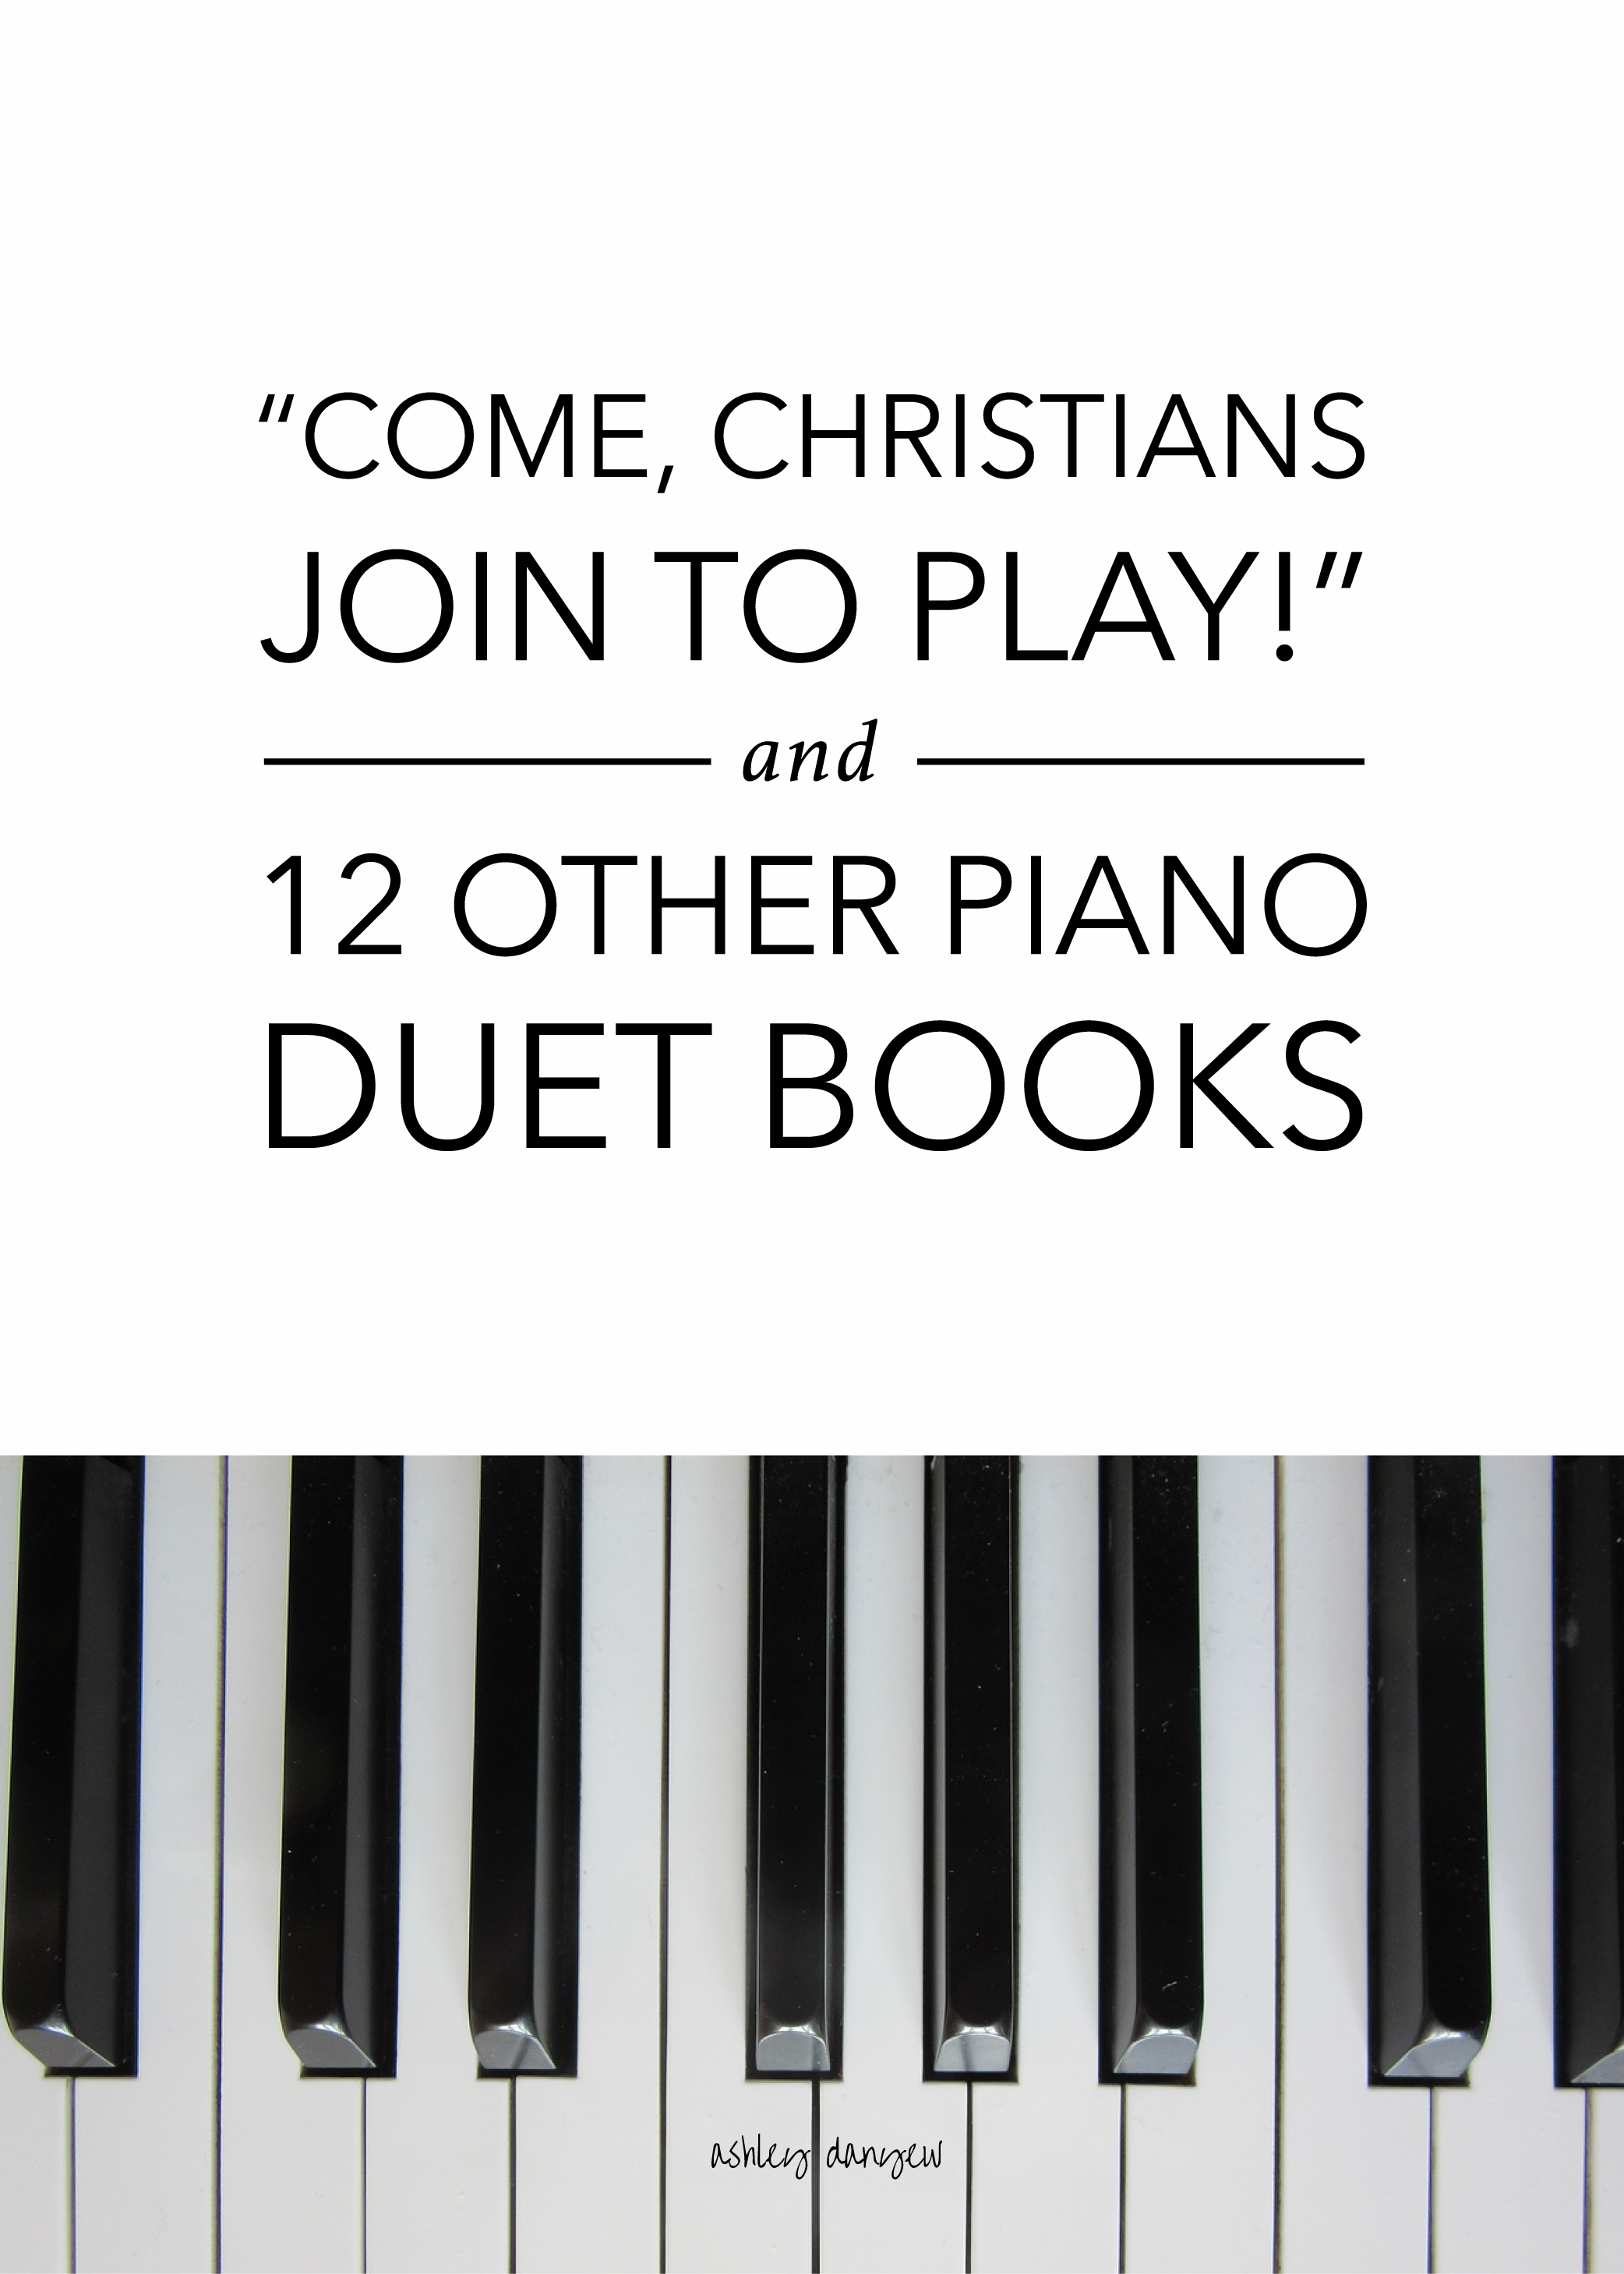 Piano Worship